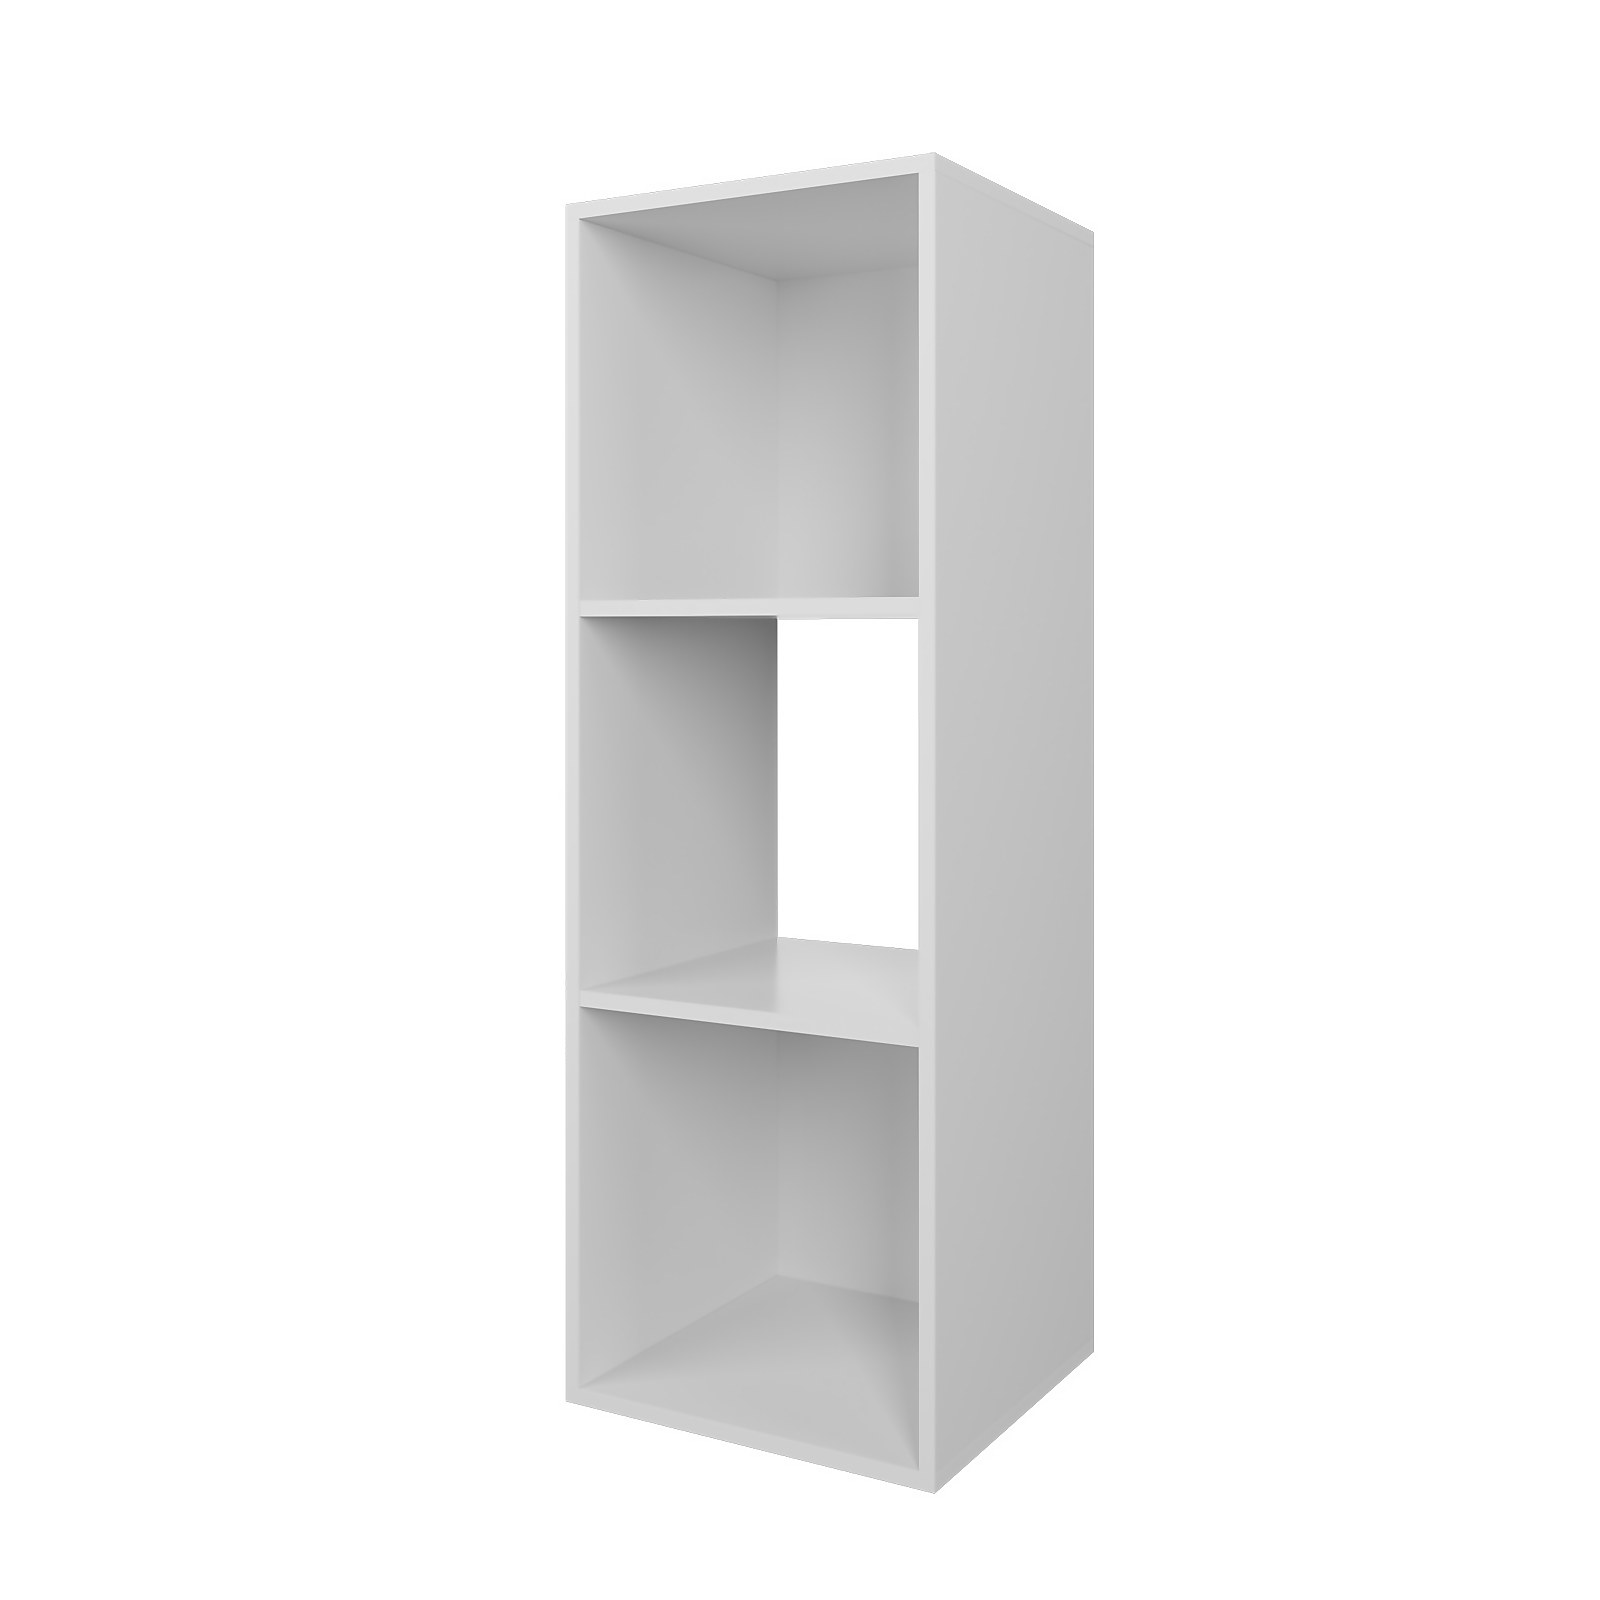 Photo of Compact Cube 3x1 Storage Unit - White